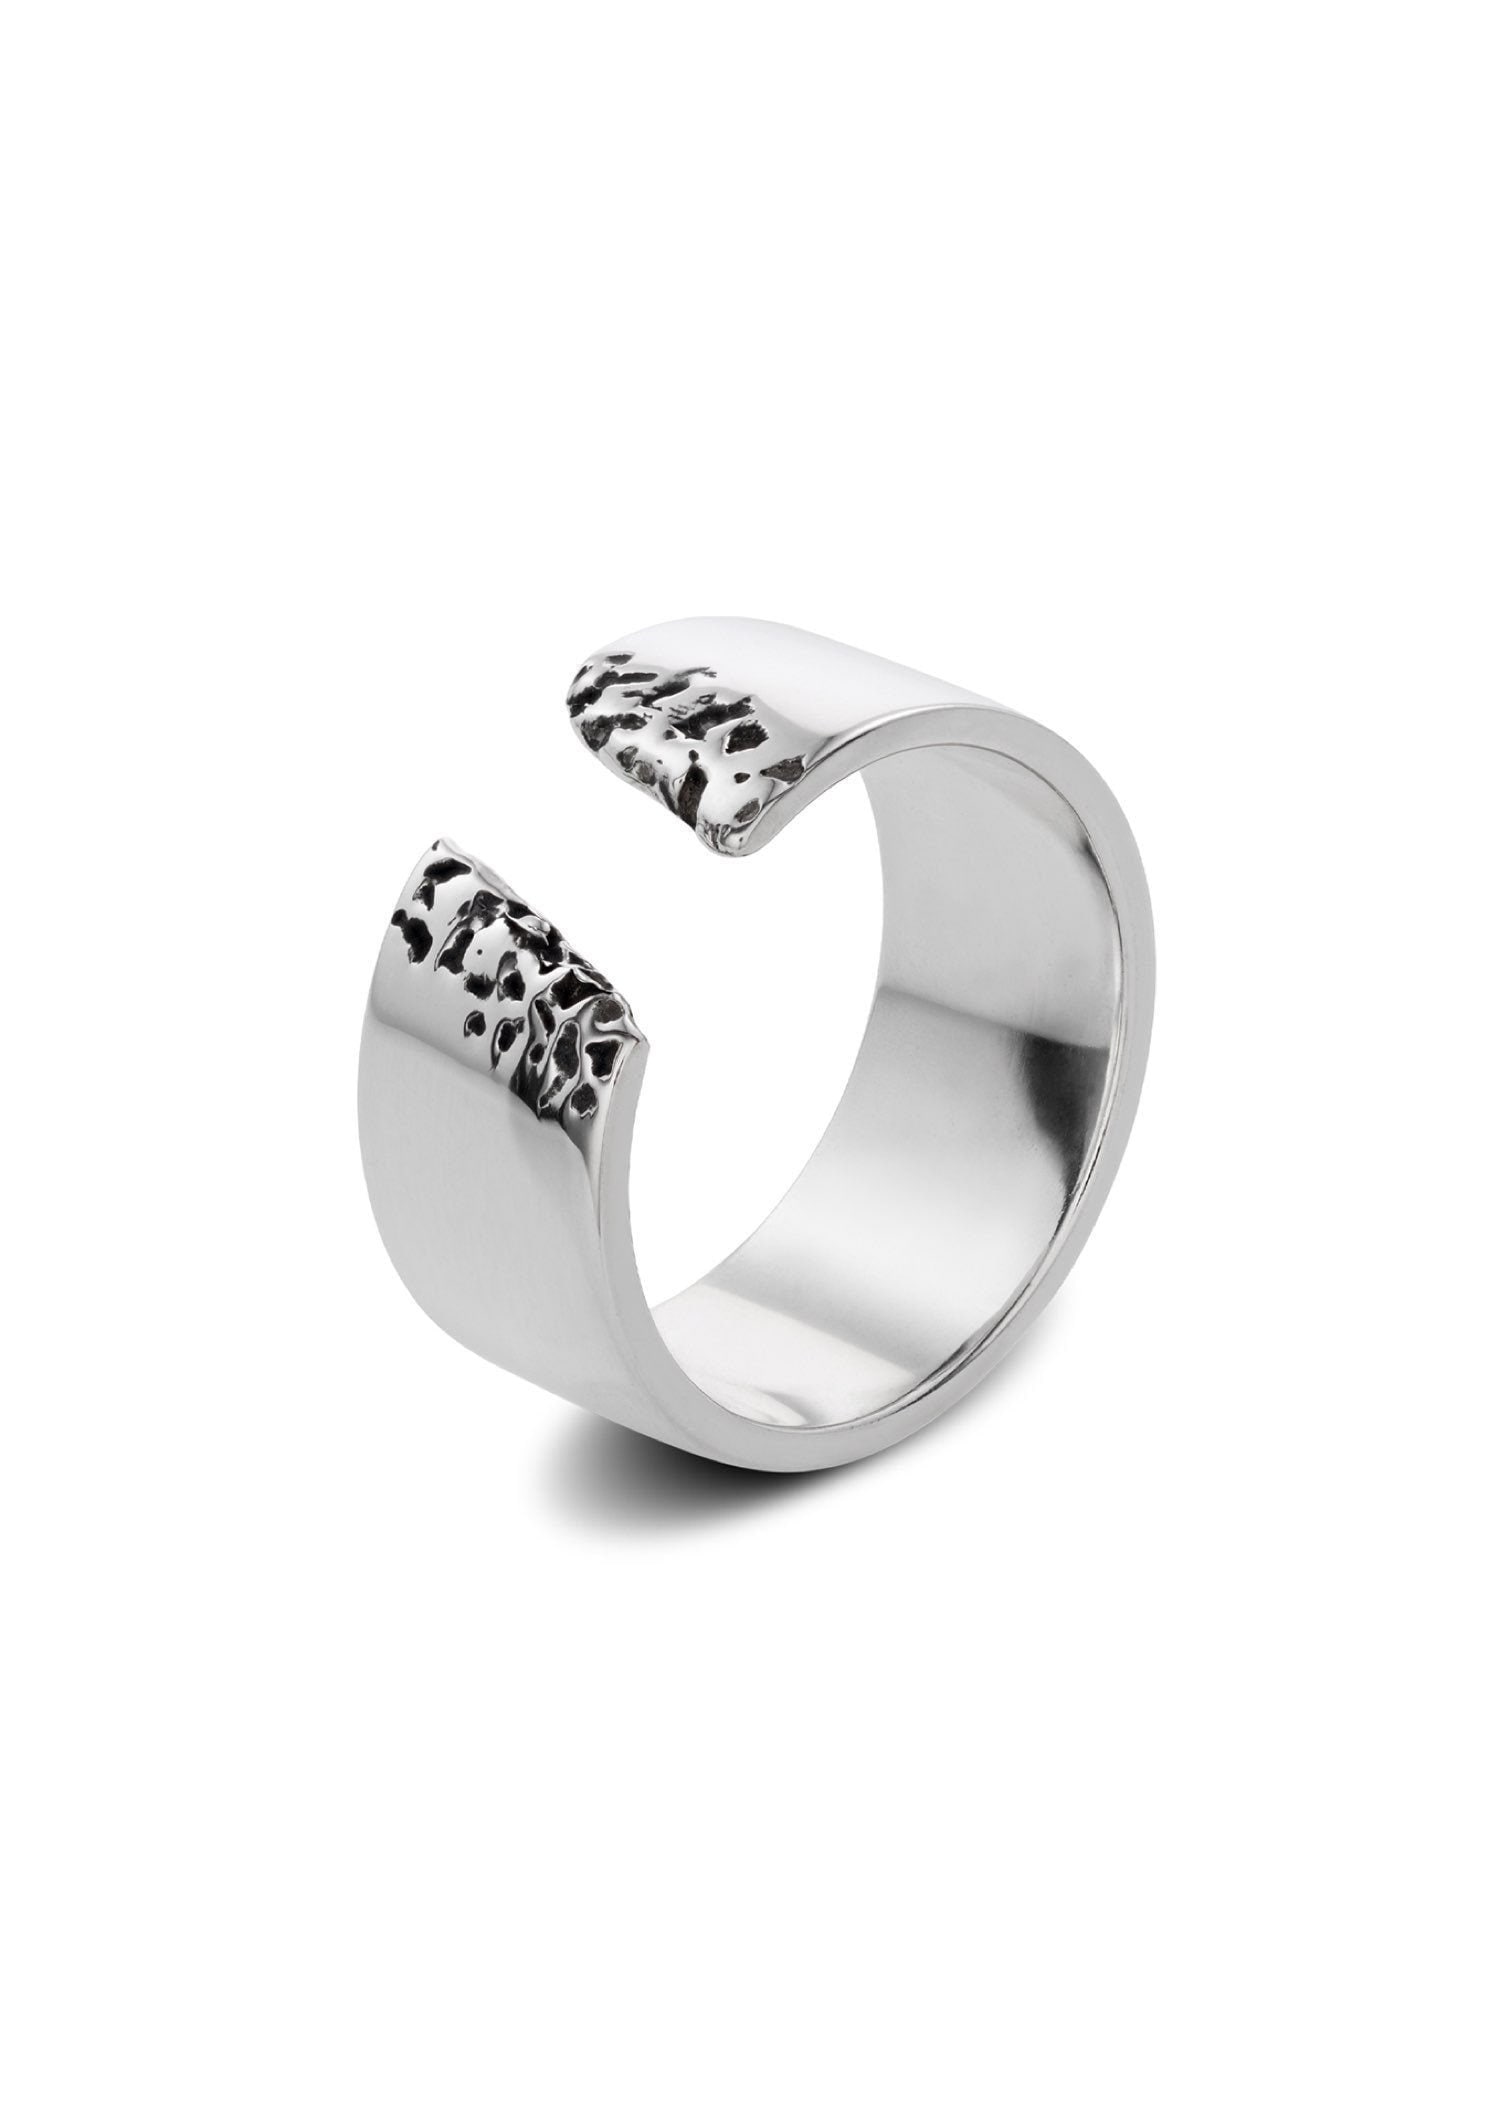 Unisex Broken Ring Sterling Silver Ring Statement Ring Man | Etsy